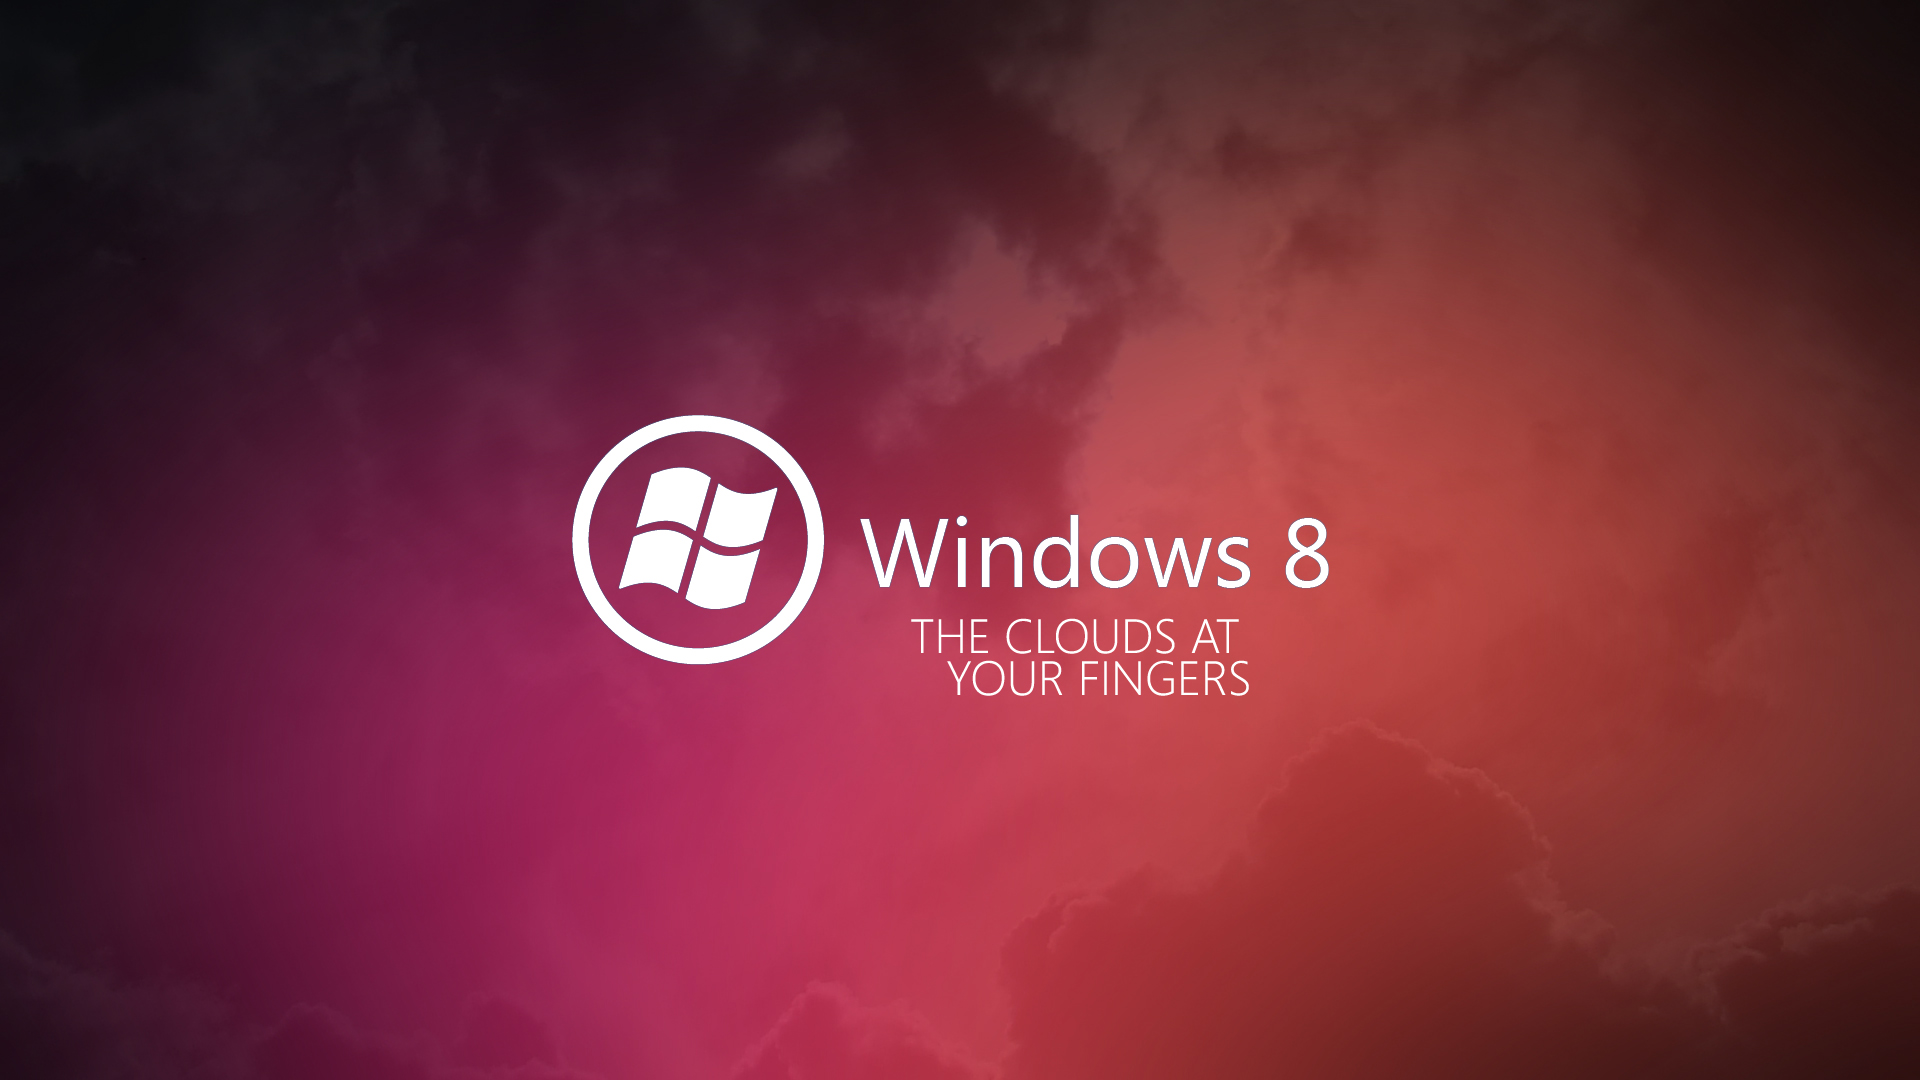 windows 8 wallpaper hd 1080p download #22